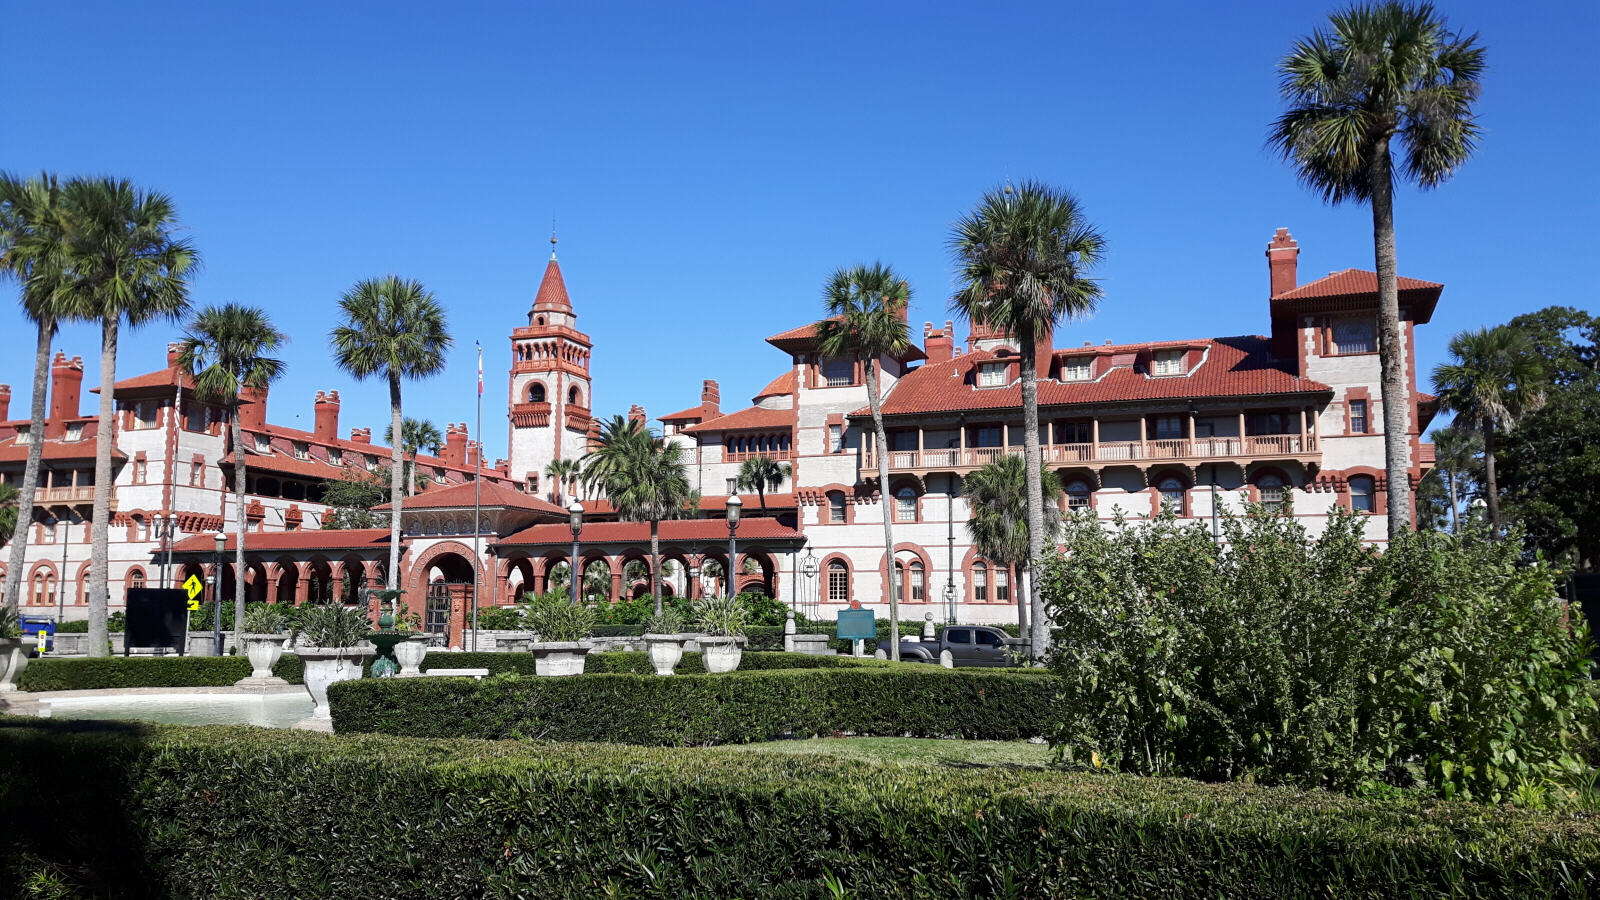 The Ponce de Leon hotel in Saint Augustine, Florida